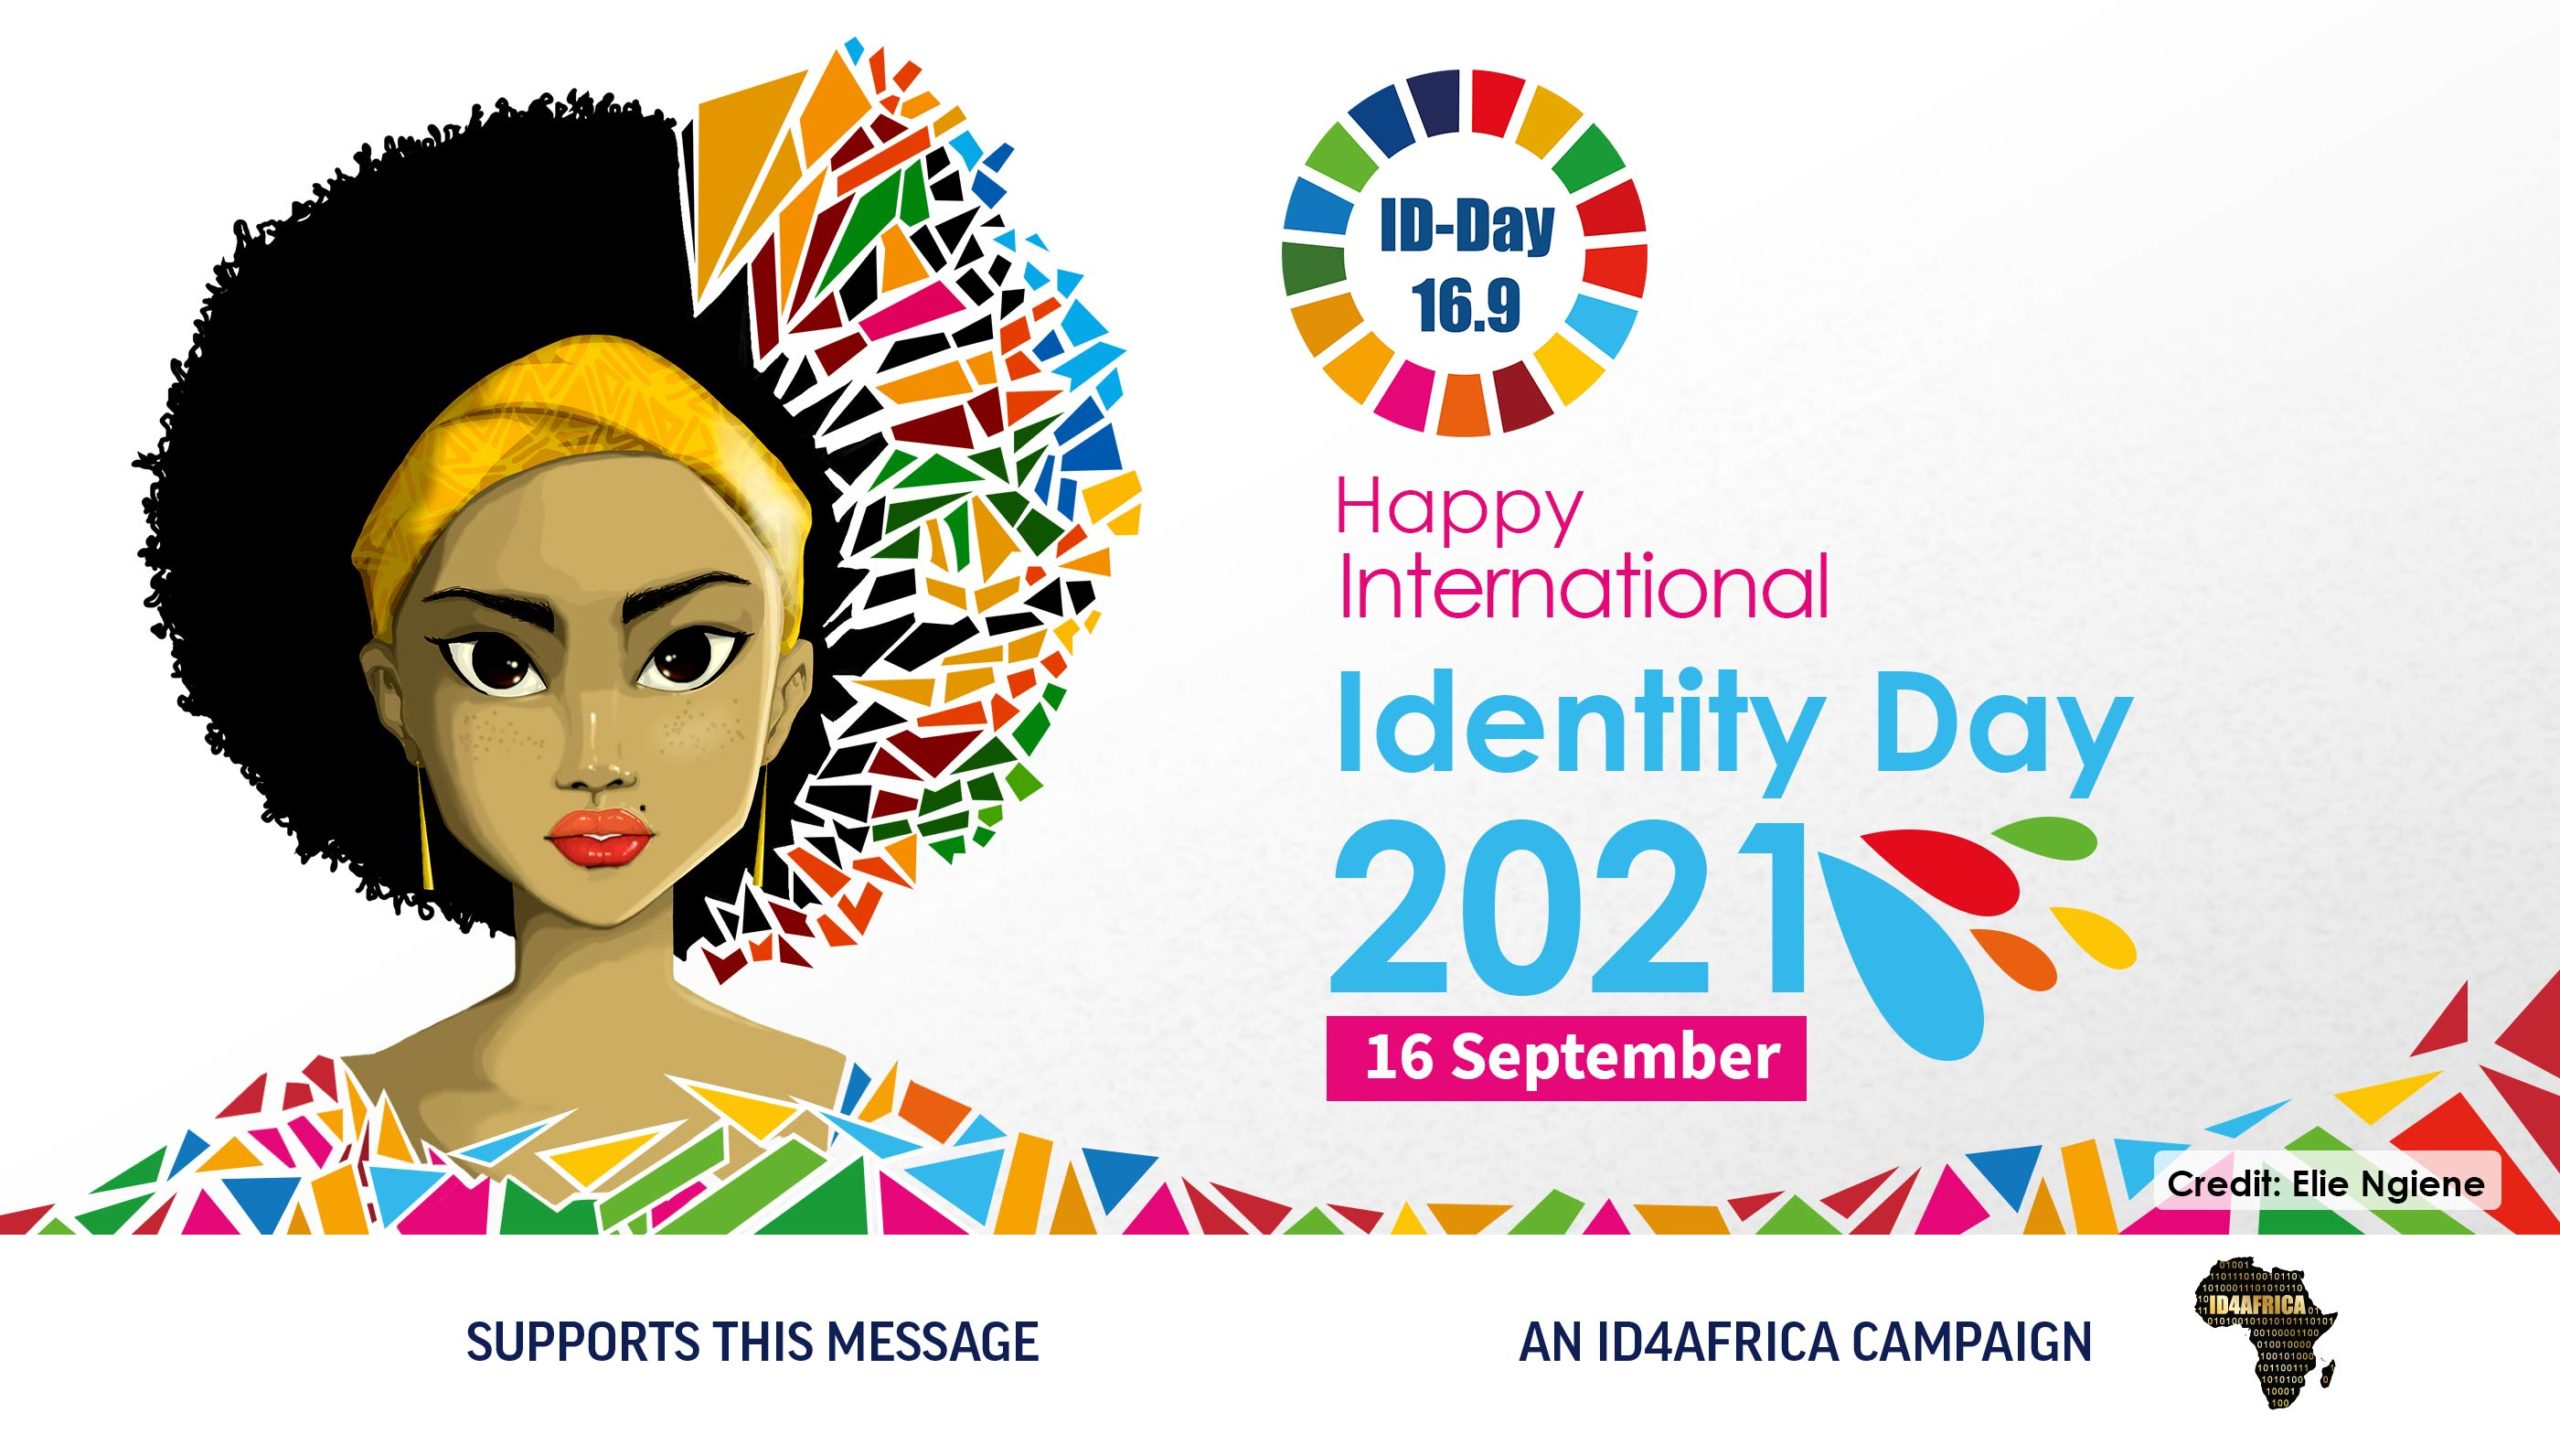 We wish you a Happy International ID Day!